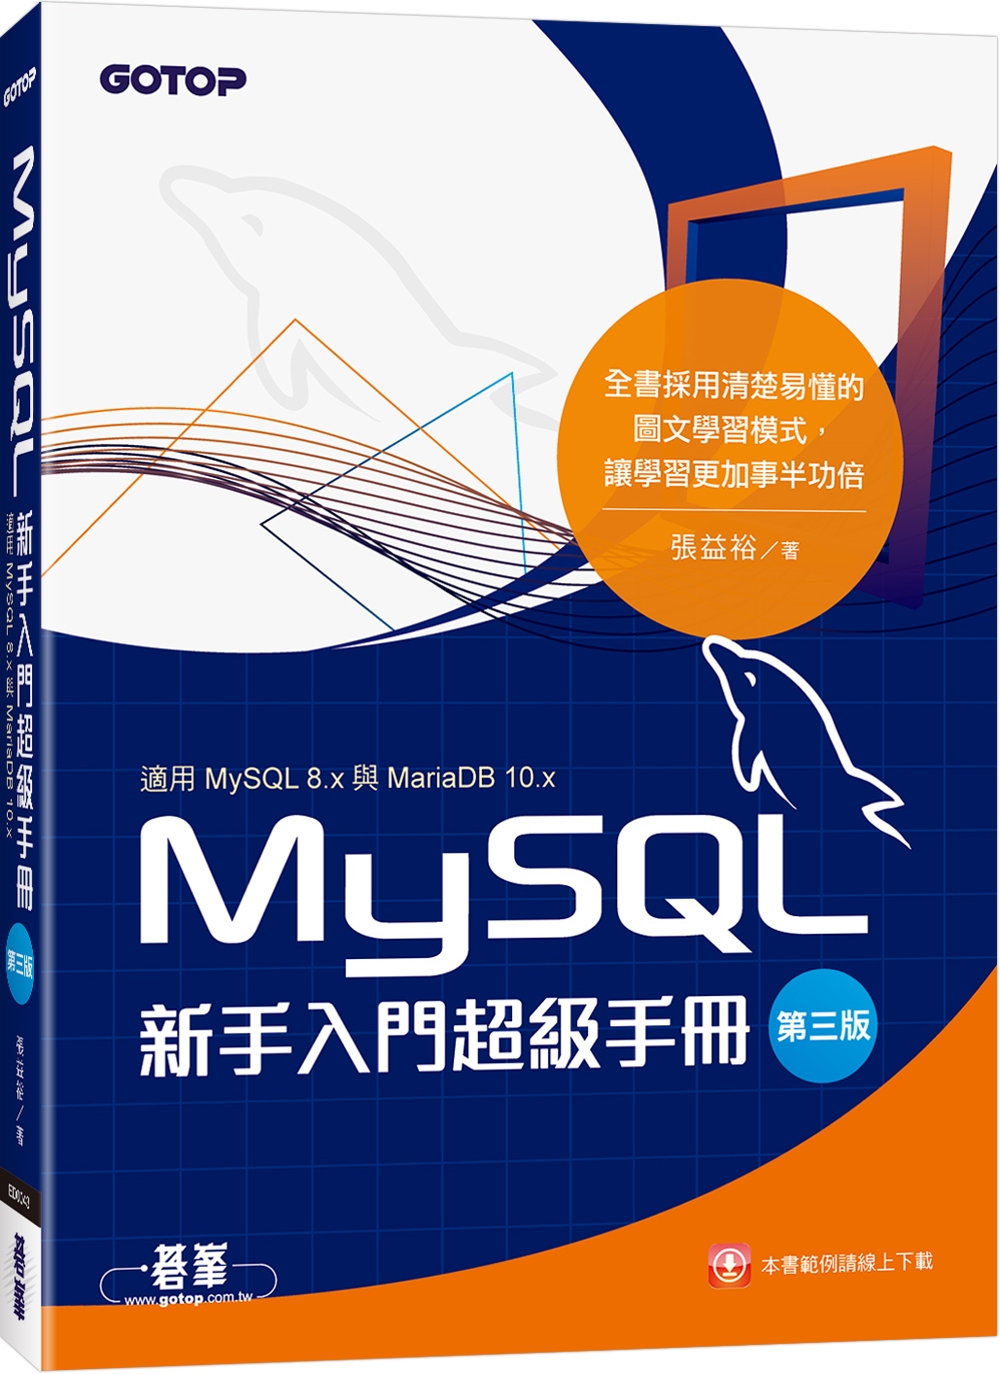 MySQL新手入門超級手冊-第三版(適用MySQL 8.x與...